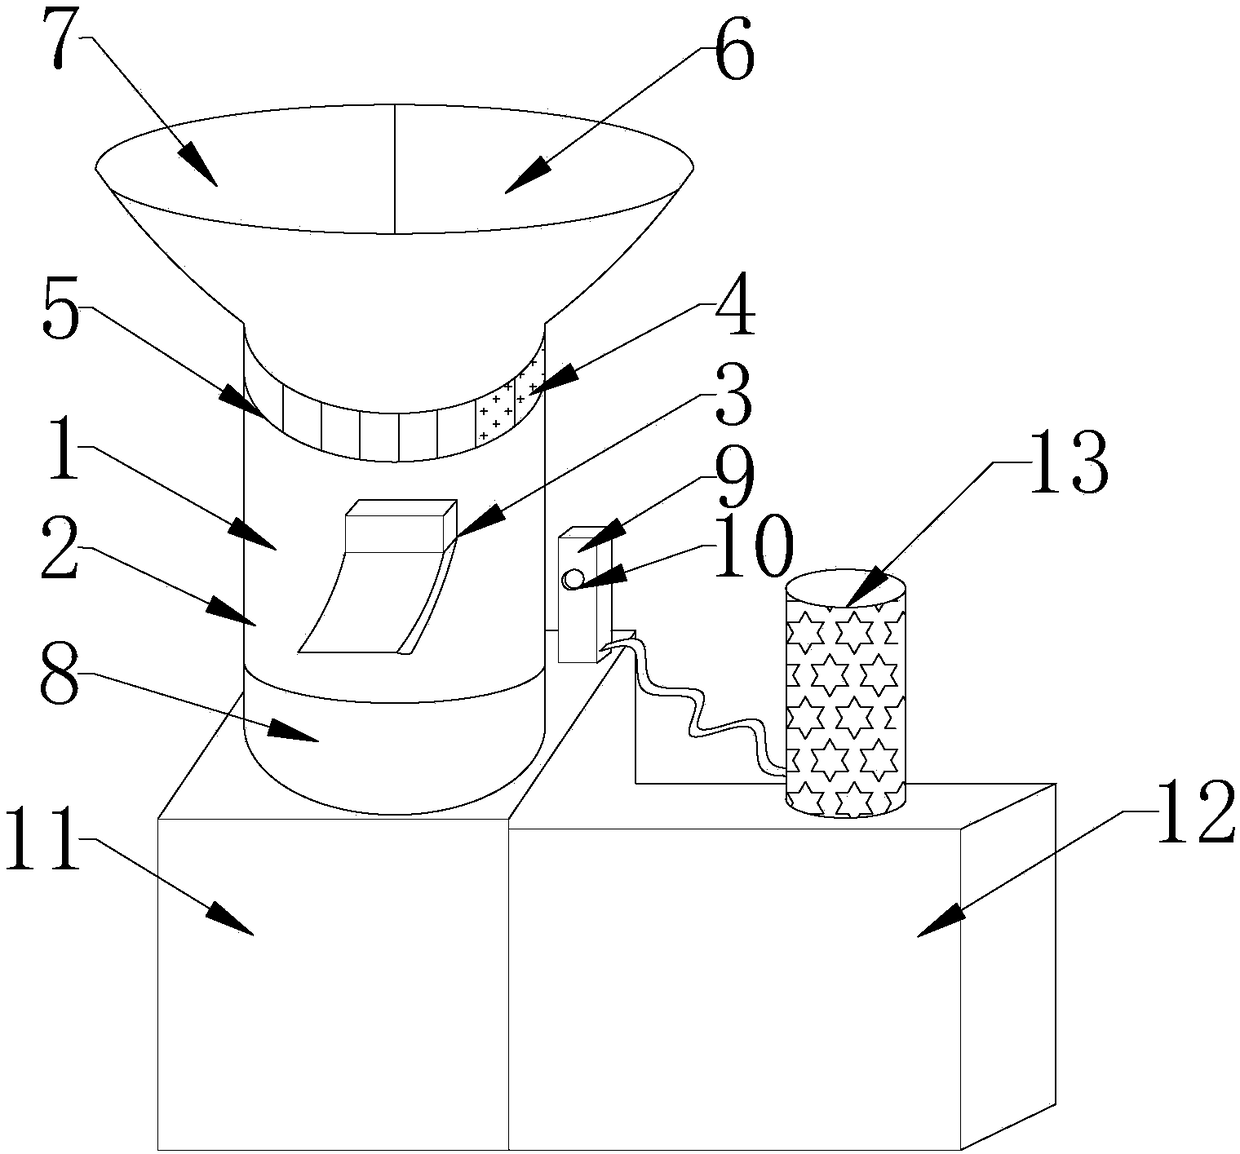 Novel compound fertilizer centrifugal granulating device